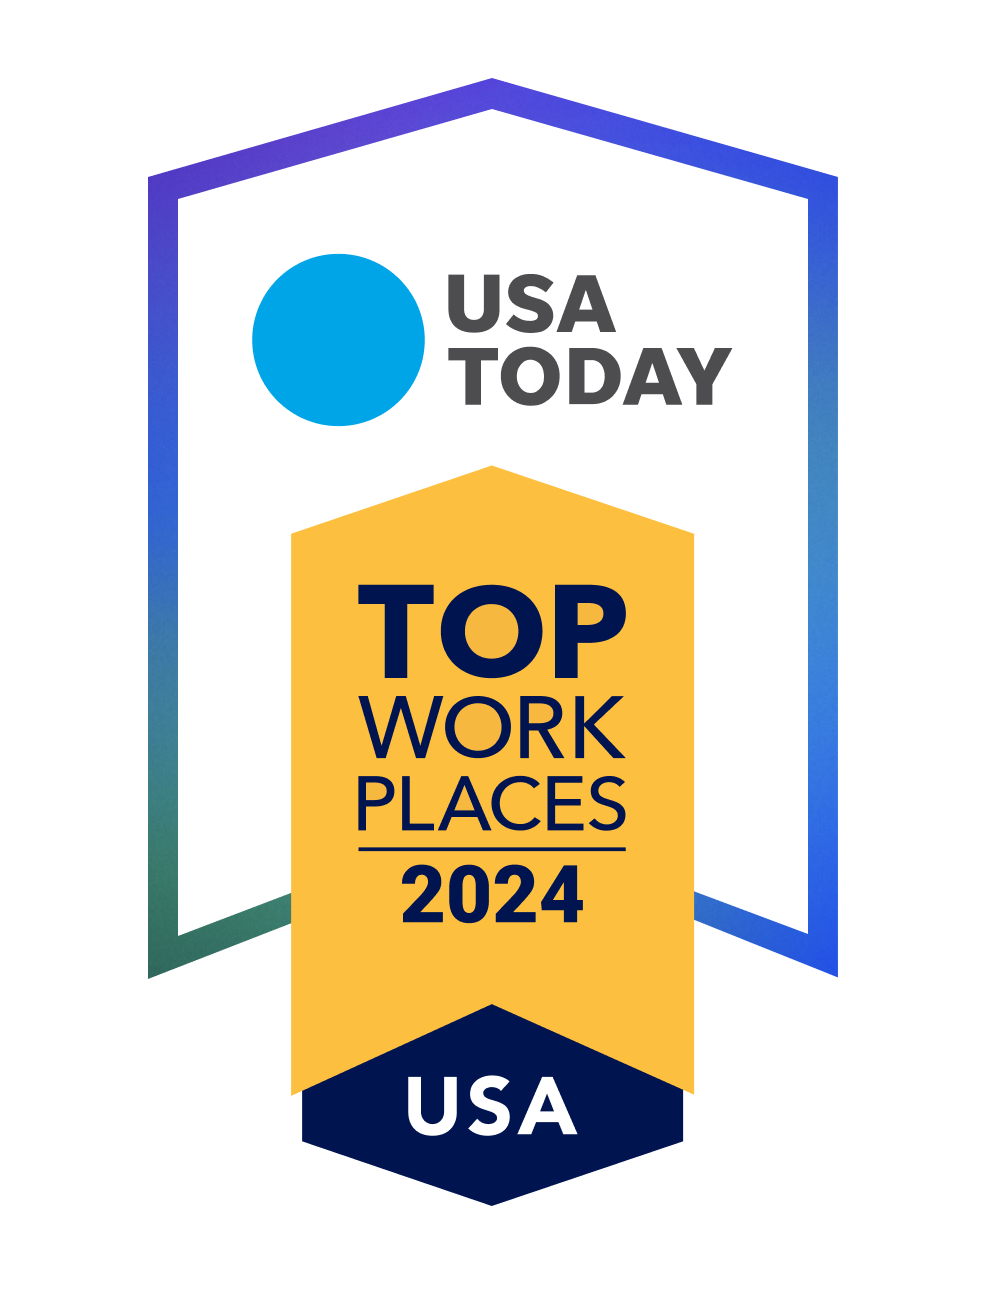 Image of an award saying "USA Today" "Top Workplaces 2024 USA"